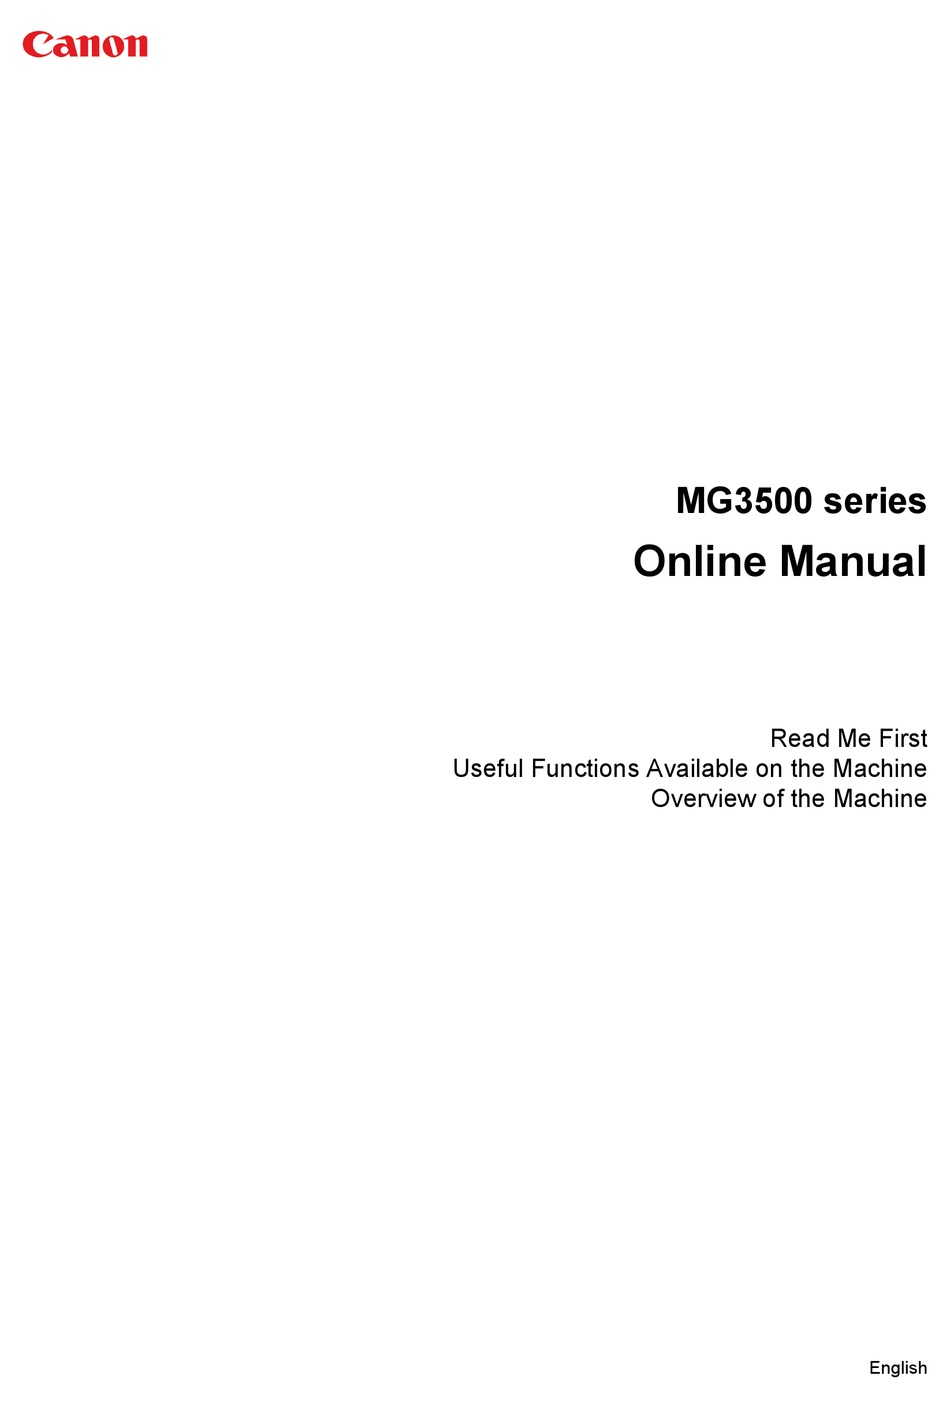 CANON MG3500 SERIES ONLINE MANUAL Pdf Download | ManualsLib